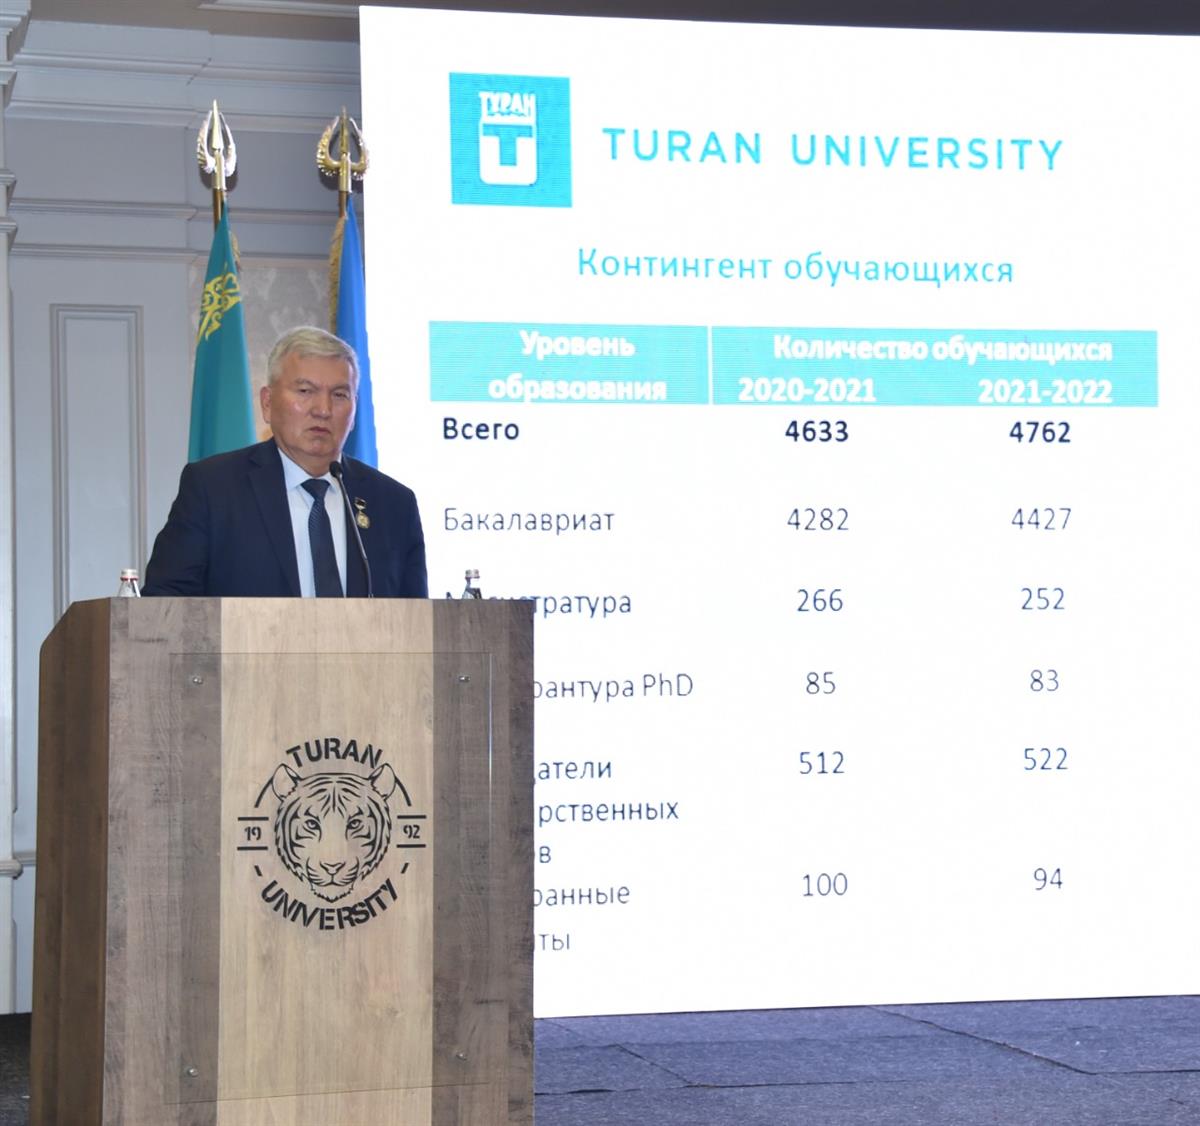 Ректор КазНУ поздравил университет «Туран» с юбилеем